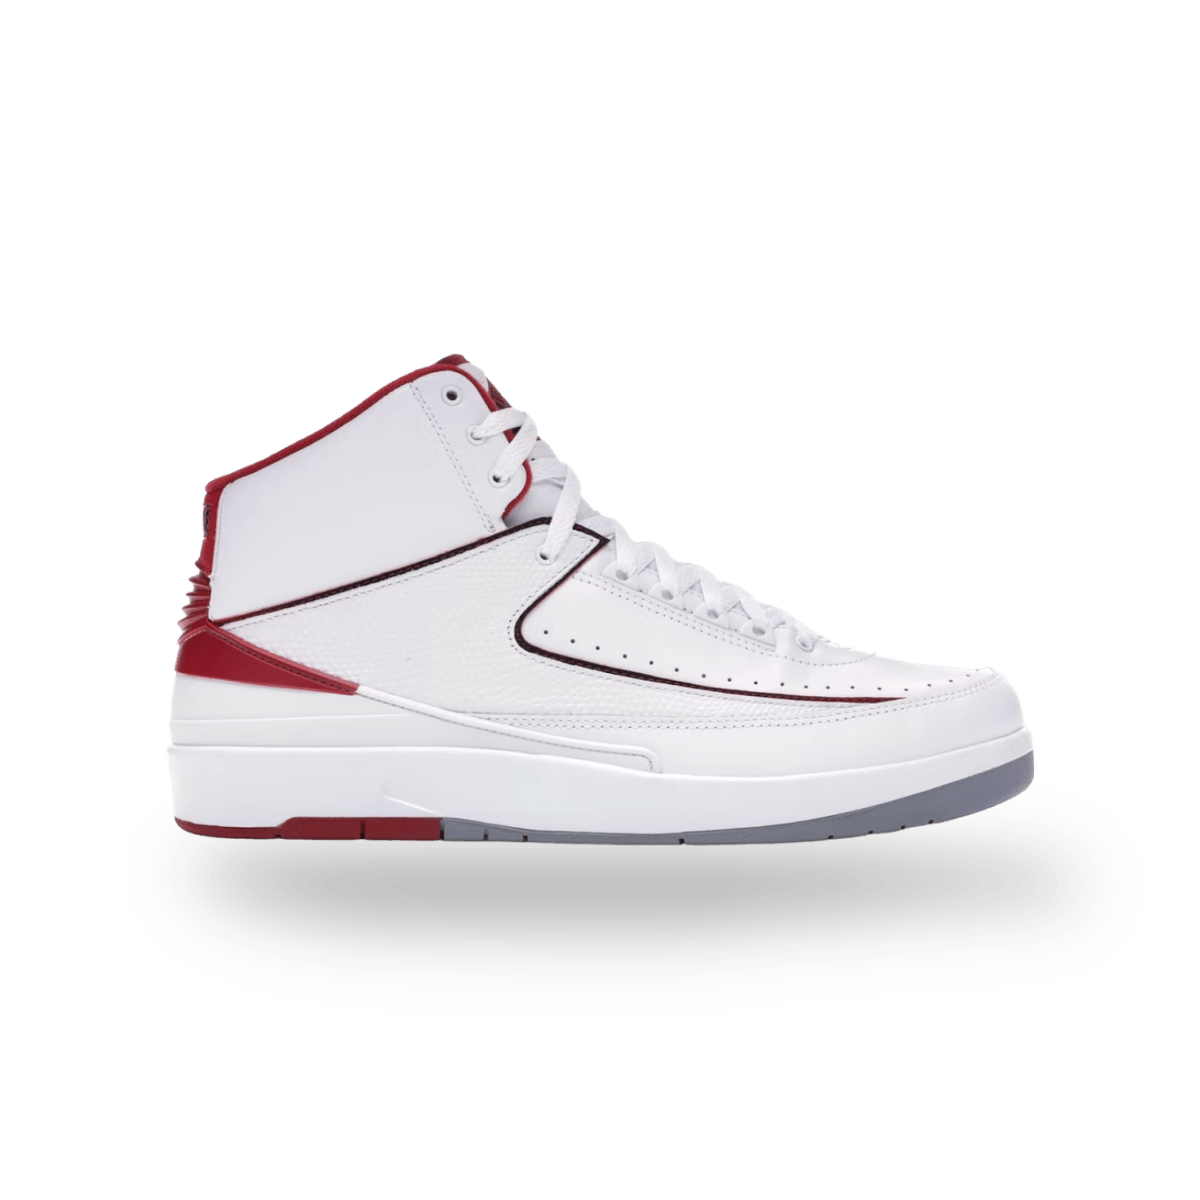 Jordan 2 Retro White Red (2014) - Gently Enjoyed (Used) - No Box Men 10.5 - High Sneaker - Jordan - Jawns on Fire